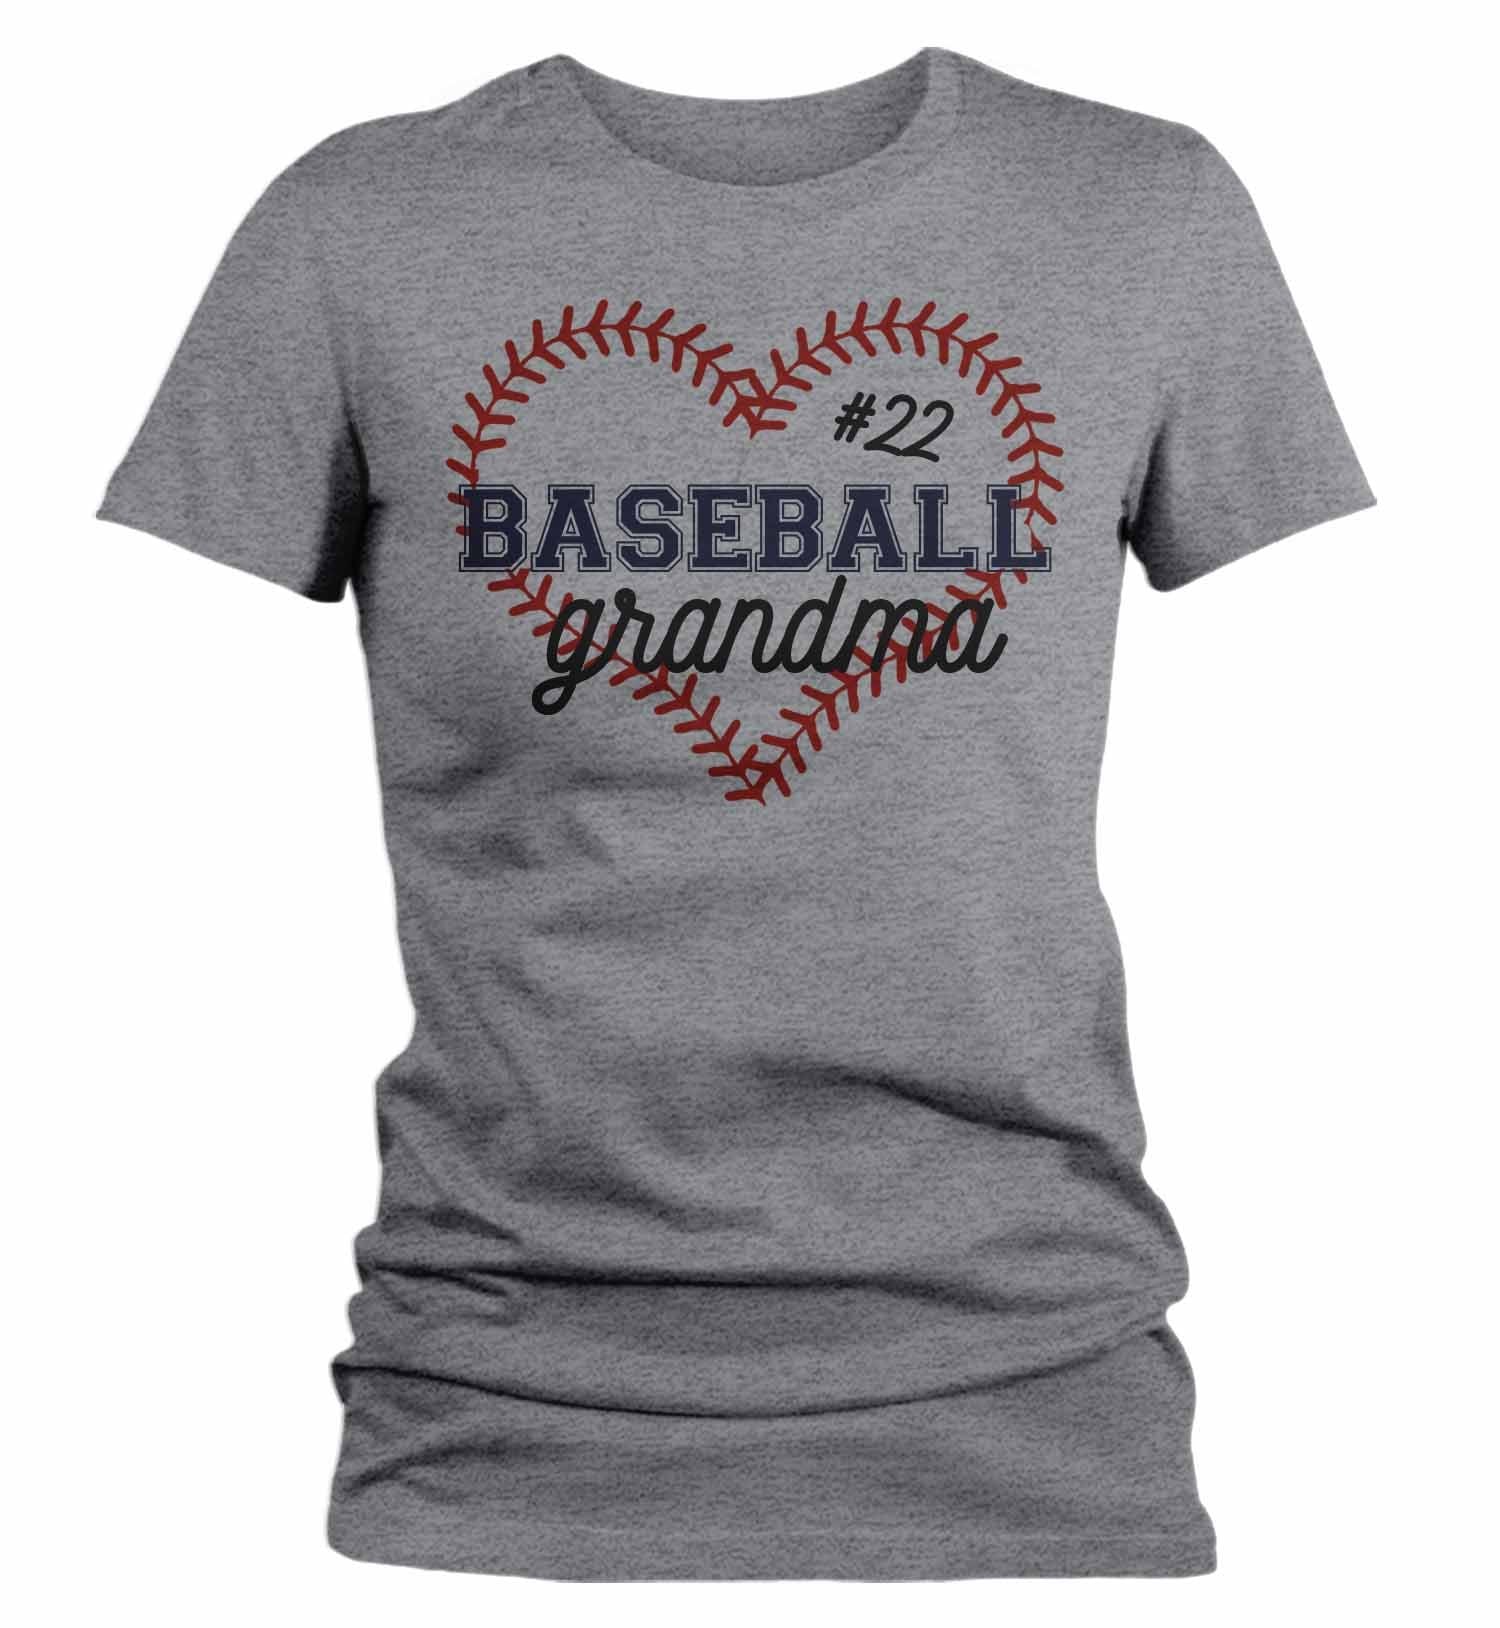 custom made baseball shirts